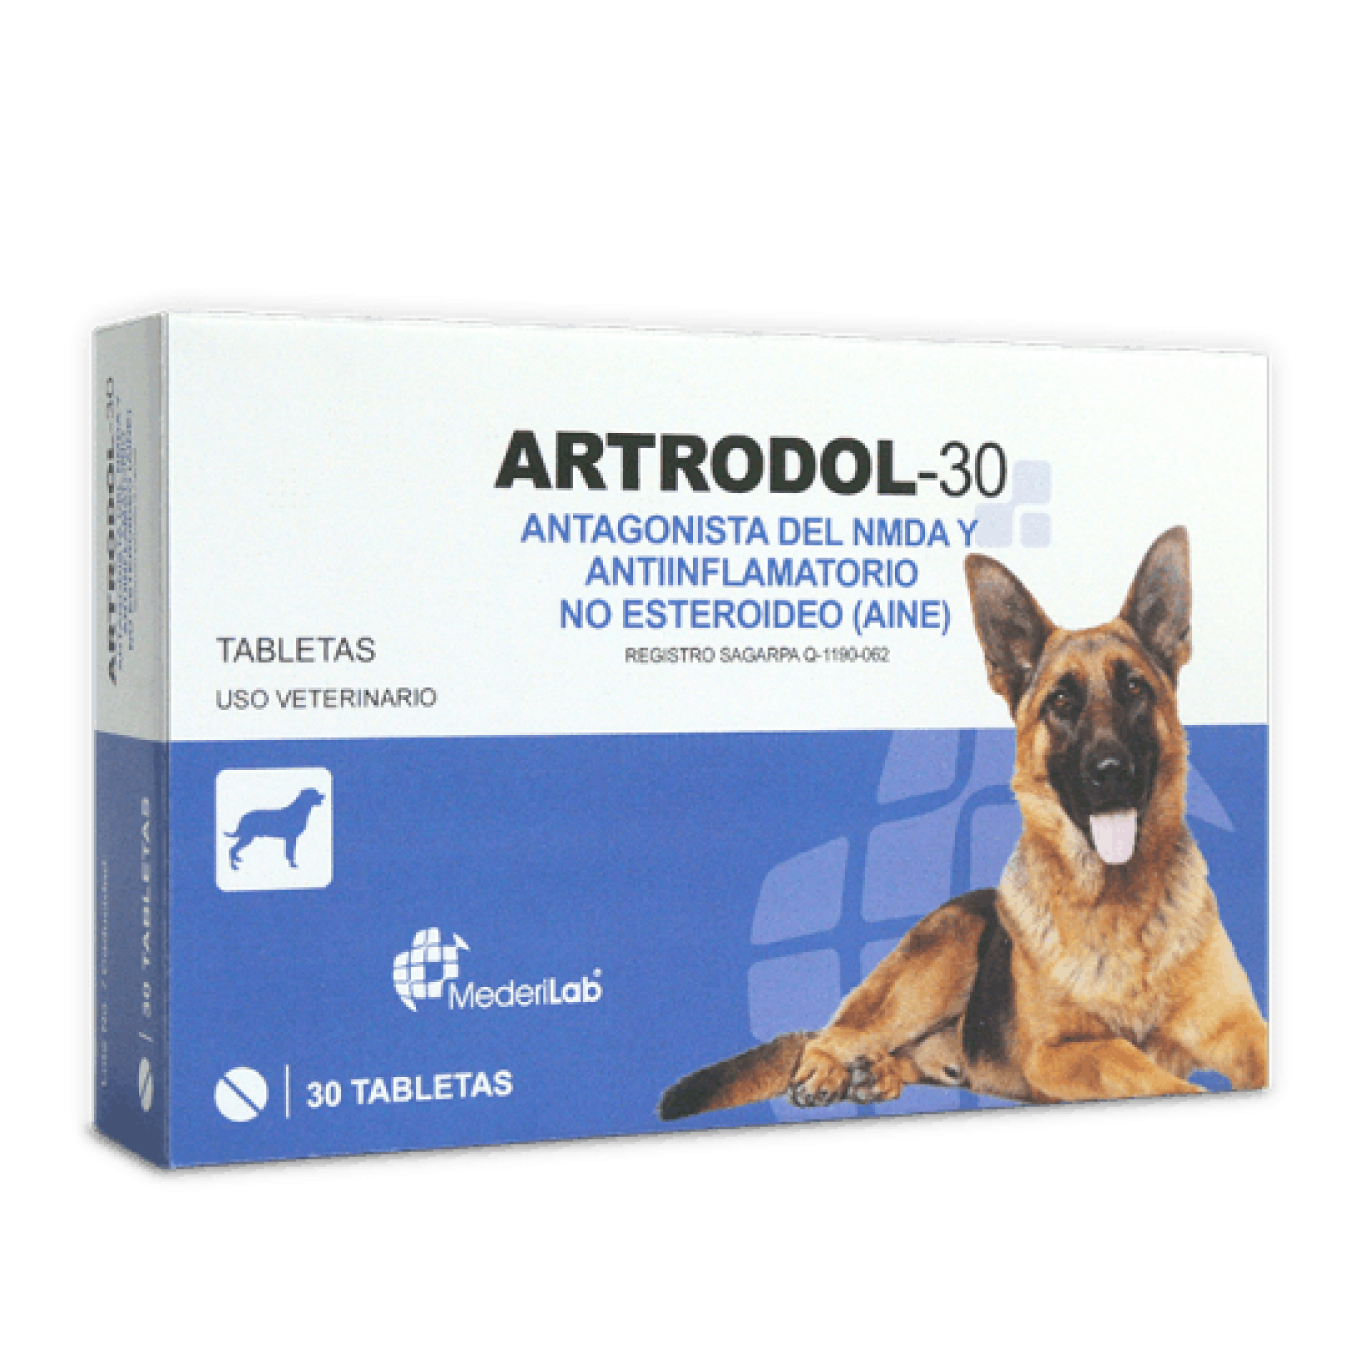 artrodol 30 tabletas antiinflamatorio 30 tabletas mederilab